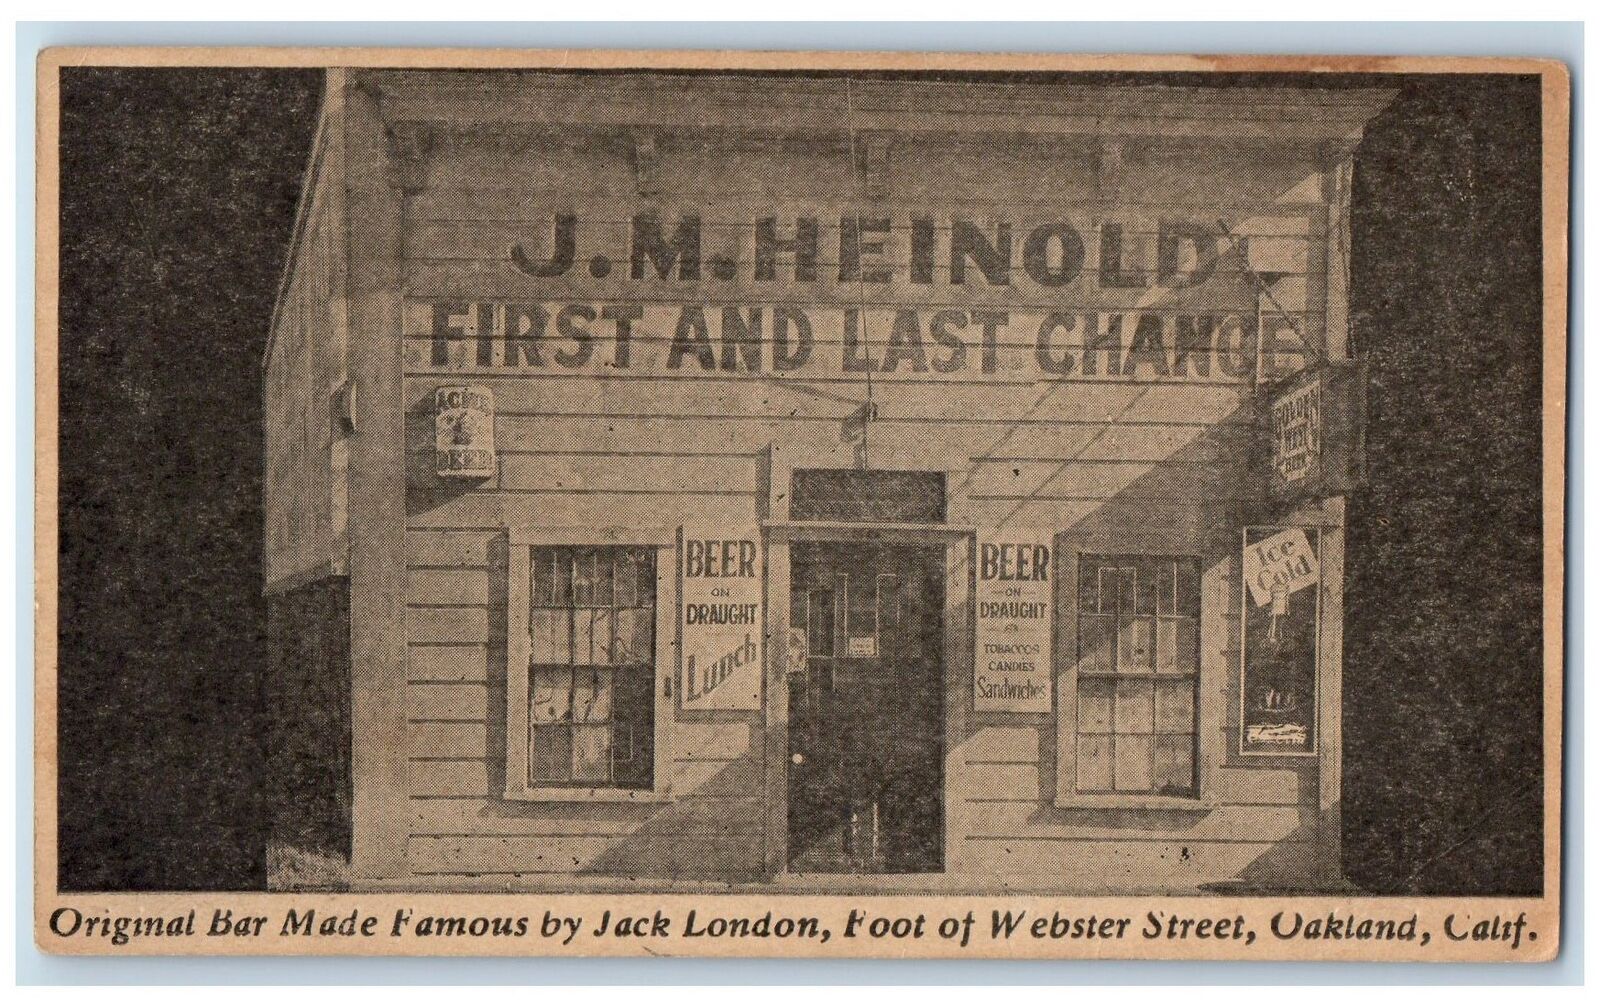 c1930's JM Heinold First Last Chance Bar Oakland CA Jack London Beer Postcard